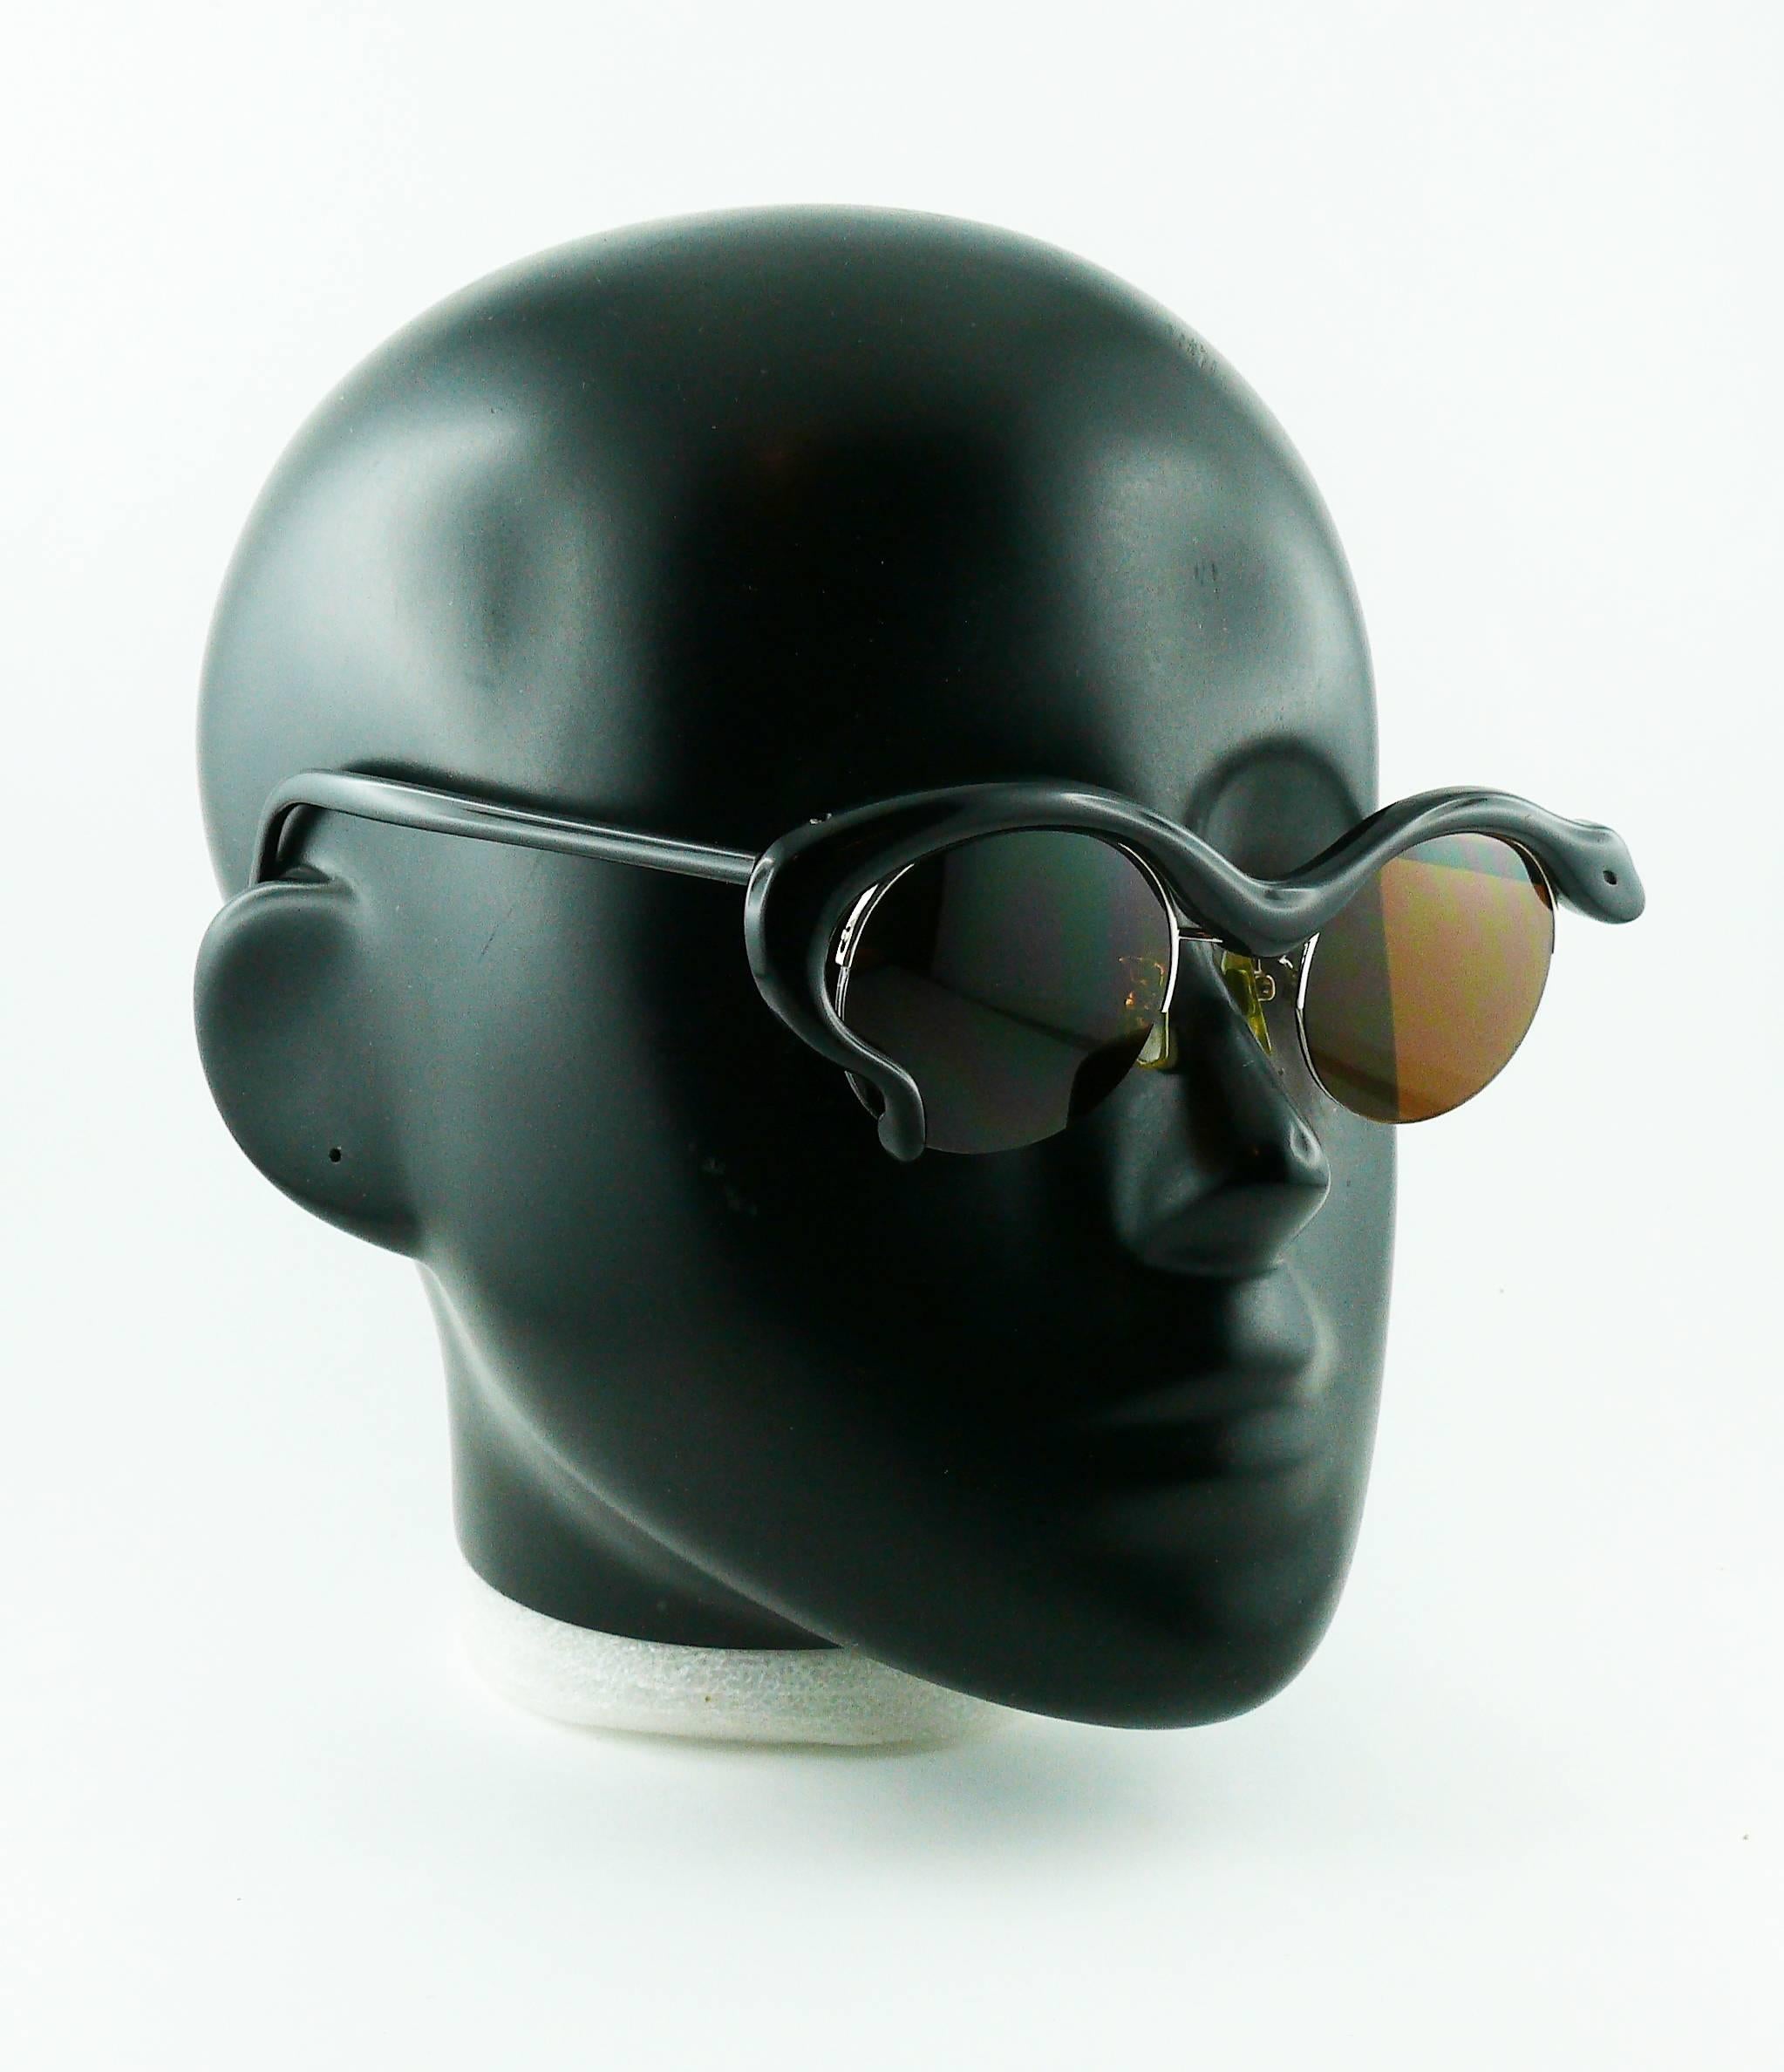 YOHJI YAMAMOTO vintage rare snake rim sunglasses.

Marked YOHJI YAMAMOTO.
Frame made in Japan.
Model 52-5001.

Indicative measurements : max. frame width approx. 14 cm (5.51 inches) / width approx. 13.6 cm (5.35 inches) / width between lenses